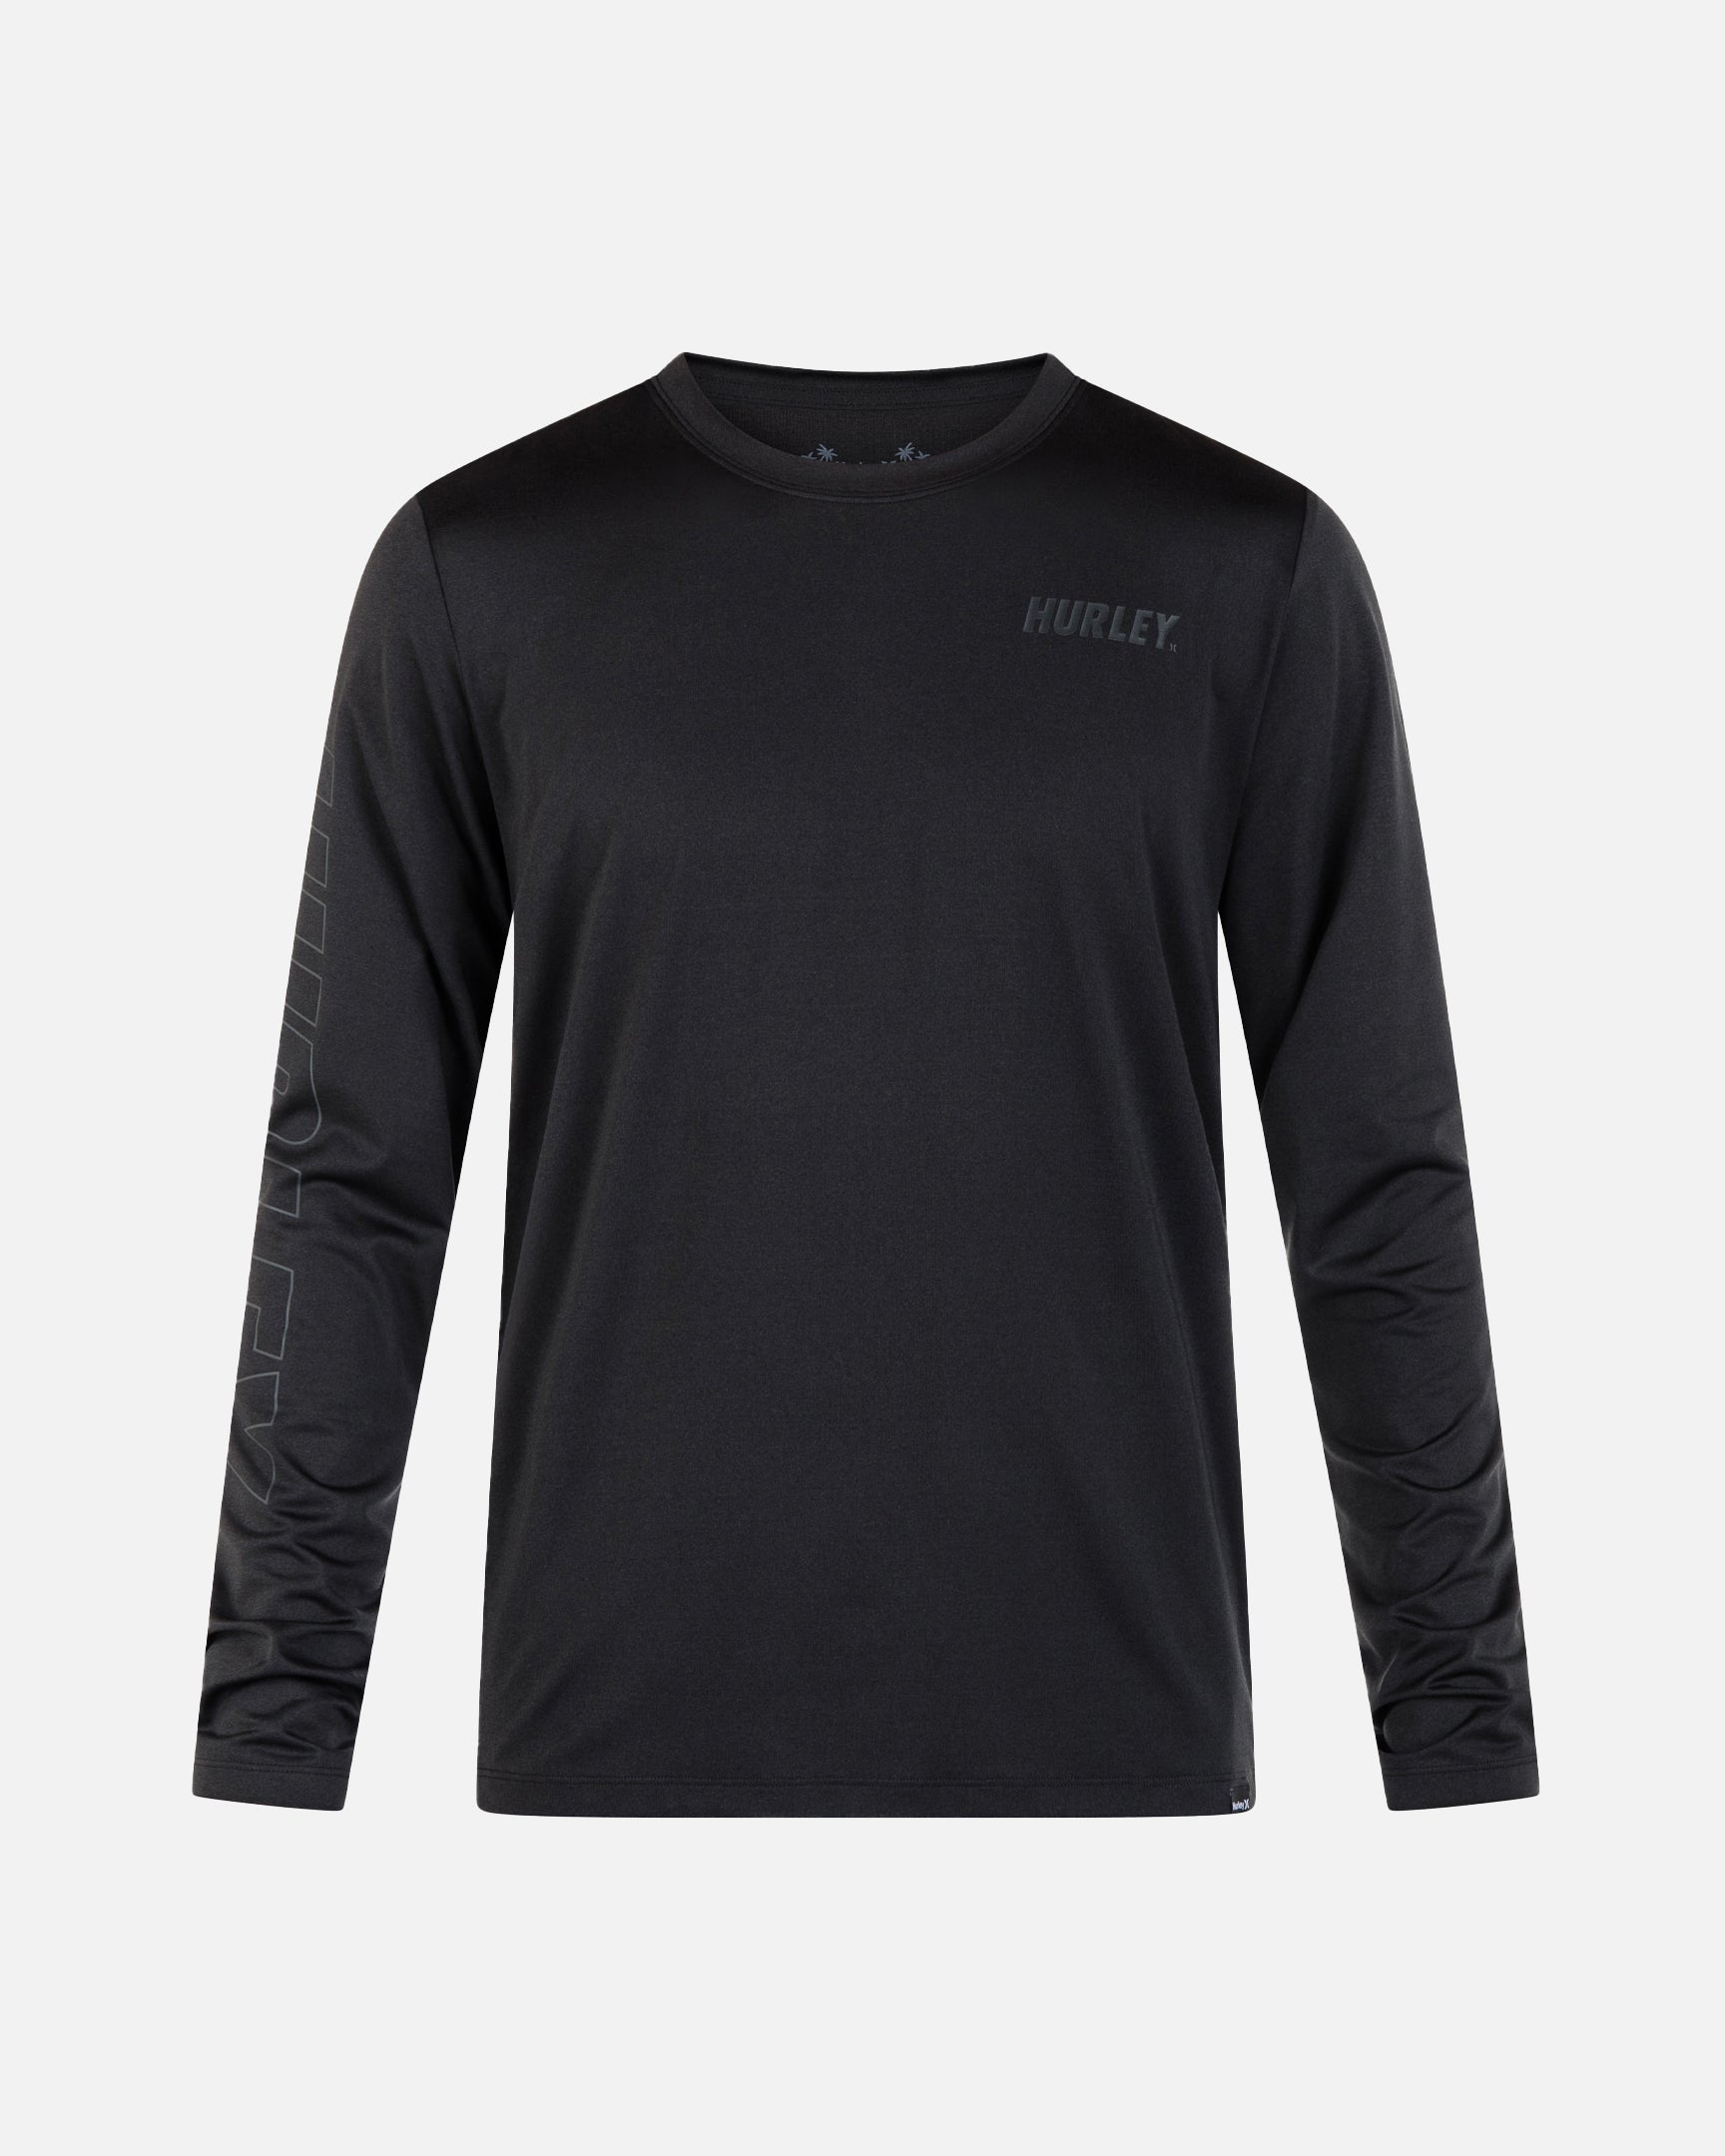 H2O-Dri Easton Upf Long Sleeve Top T-Shirt in Black Heather, Size 2XL